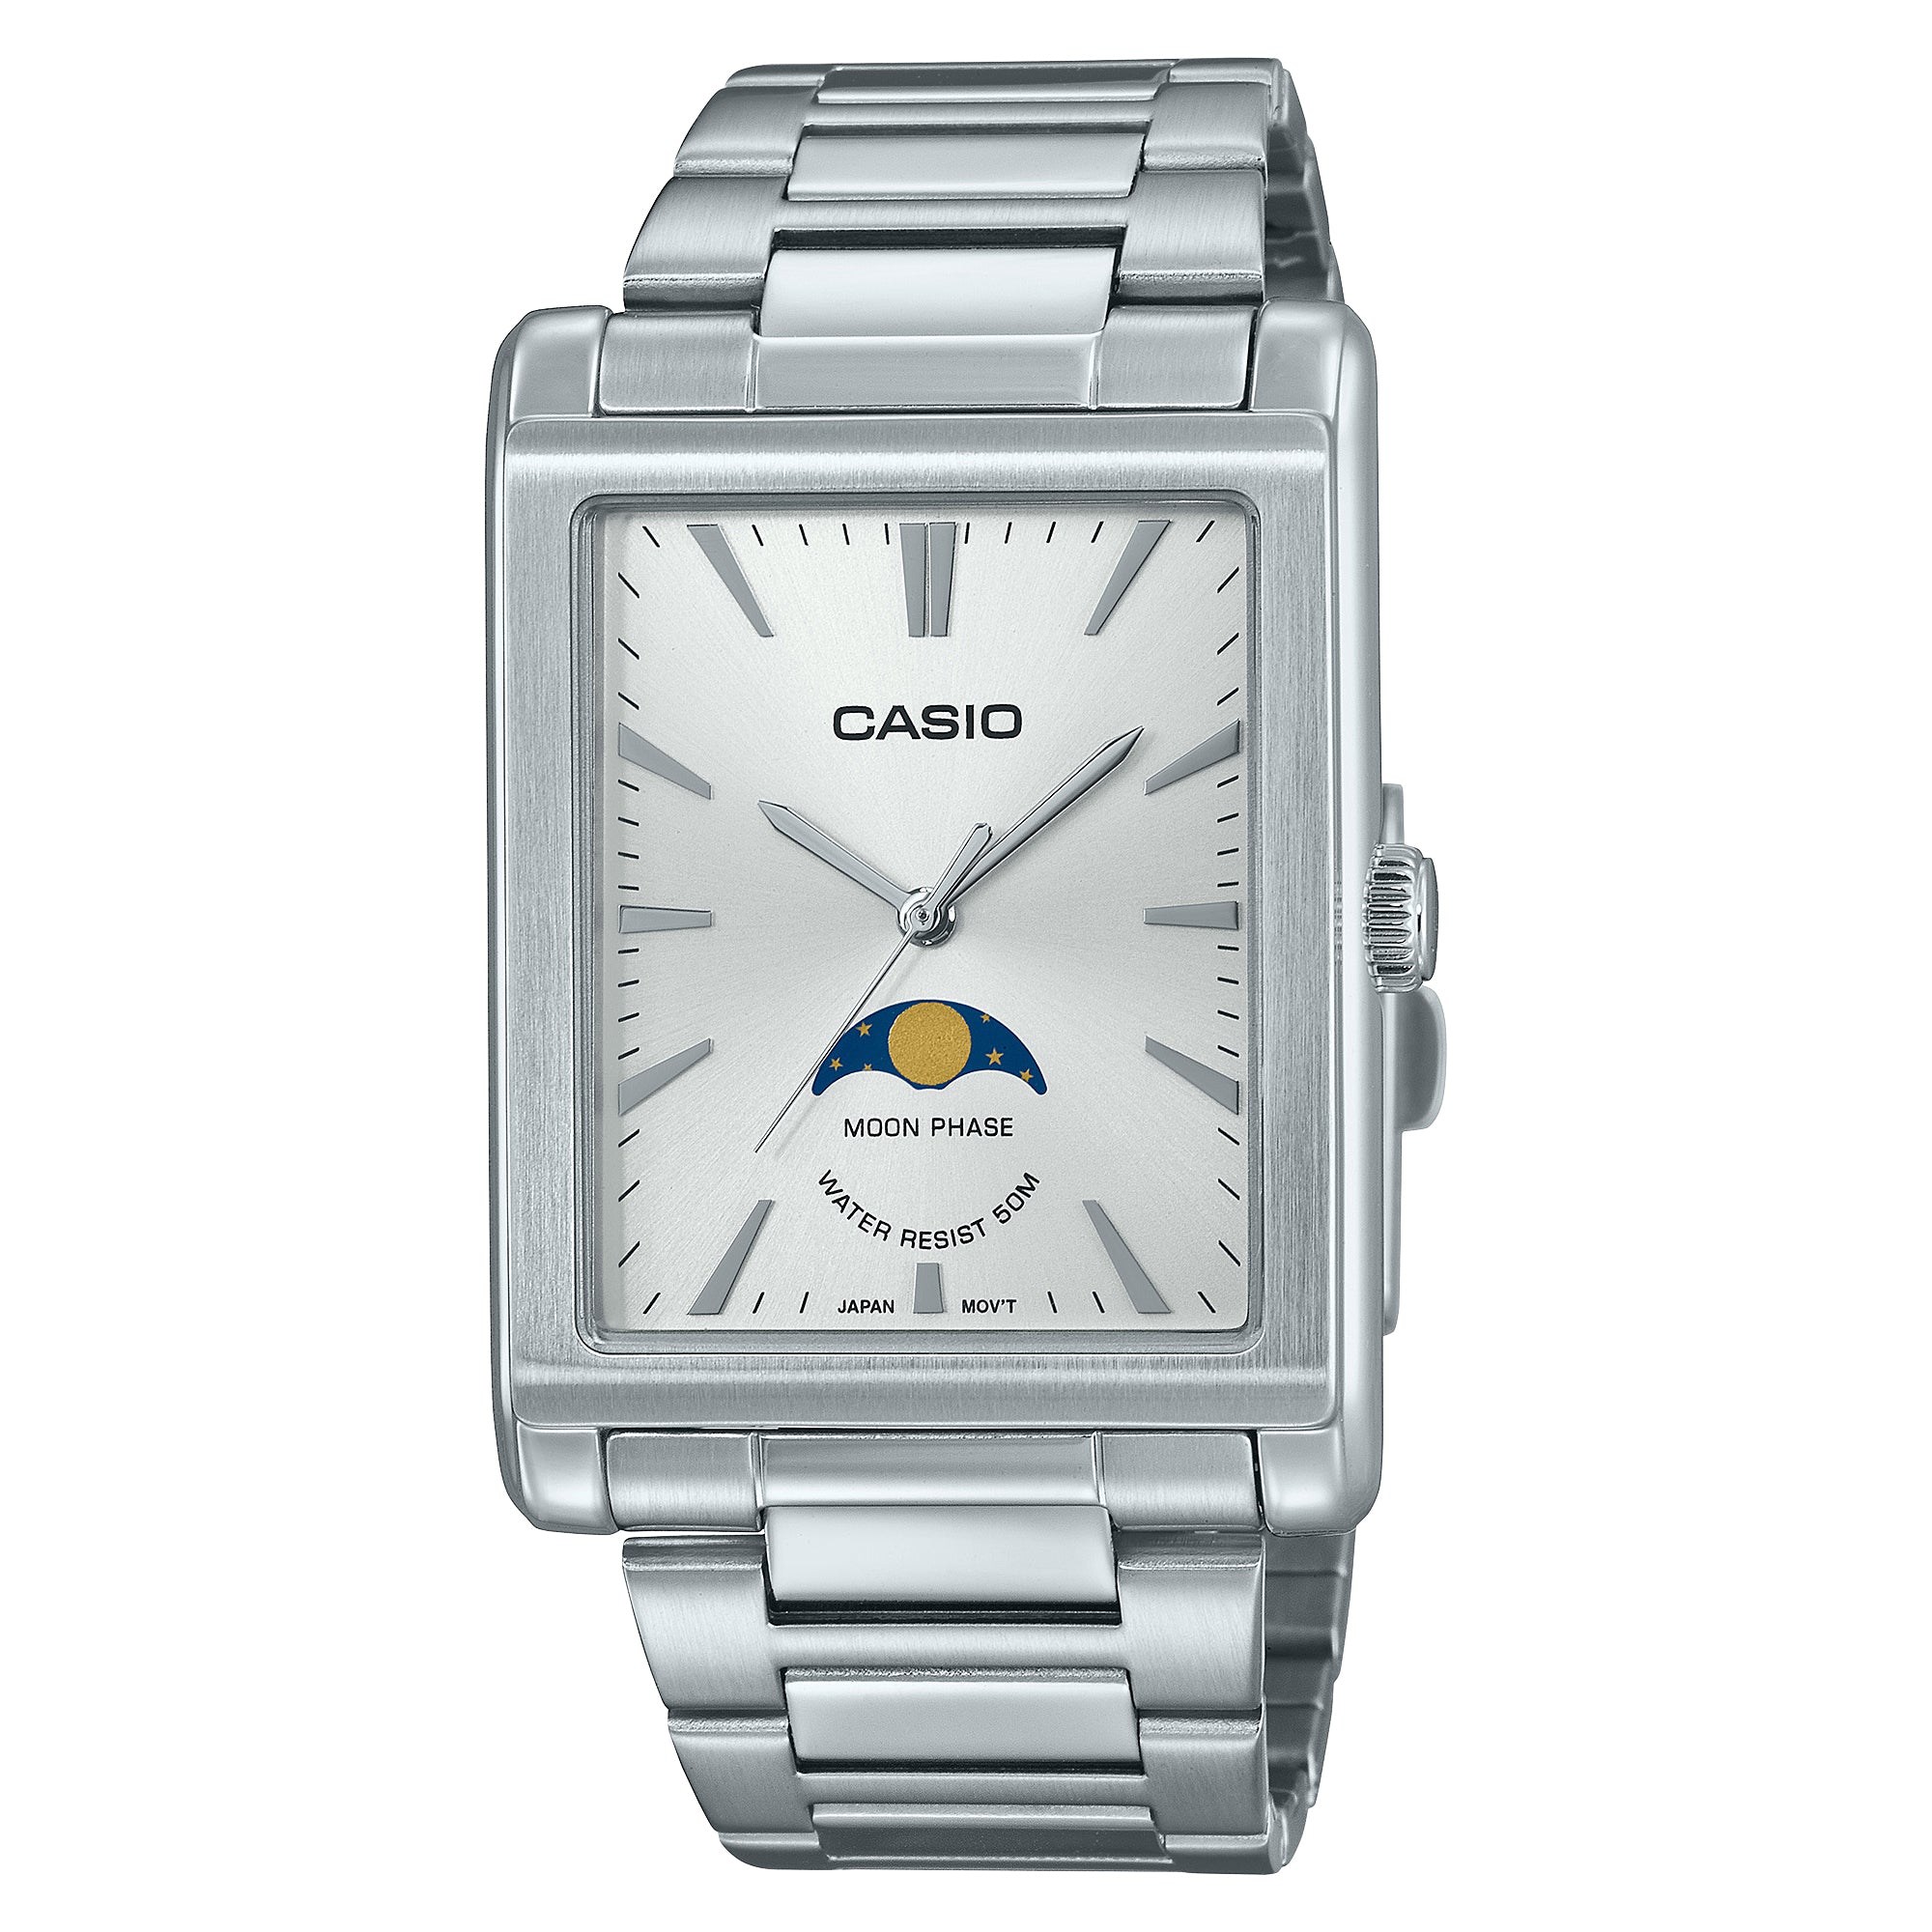 Casio Men's Analog Watch MTPM105D-7A MTP-M105D-7A